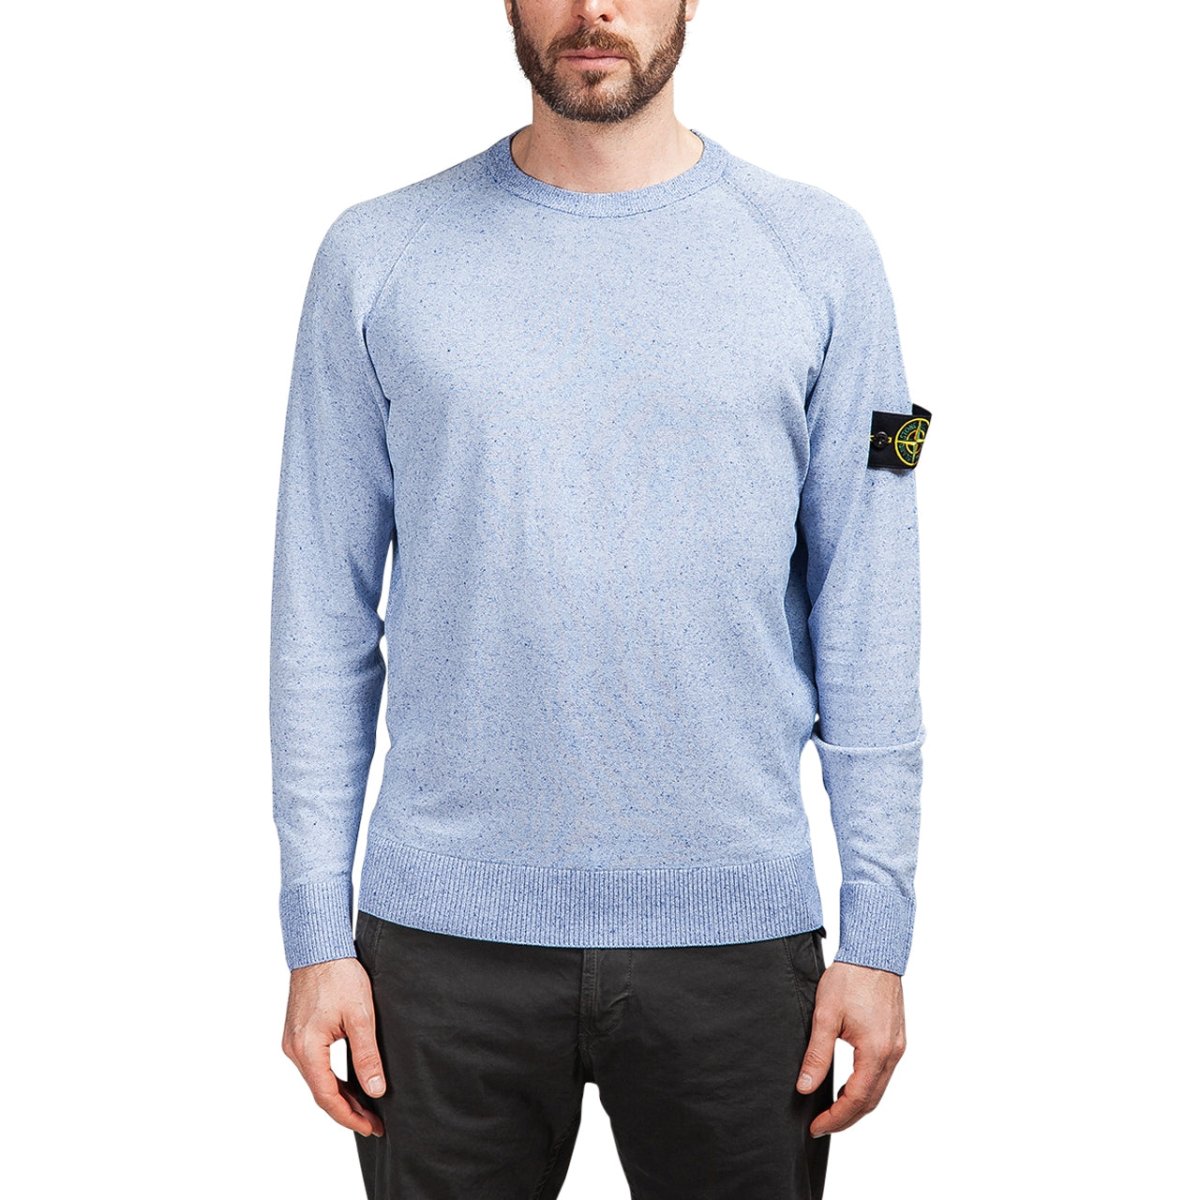 Stone Island Sweat Shirt (Blau)  - Allike Store